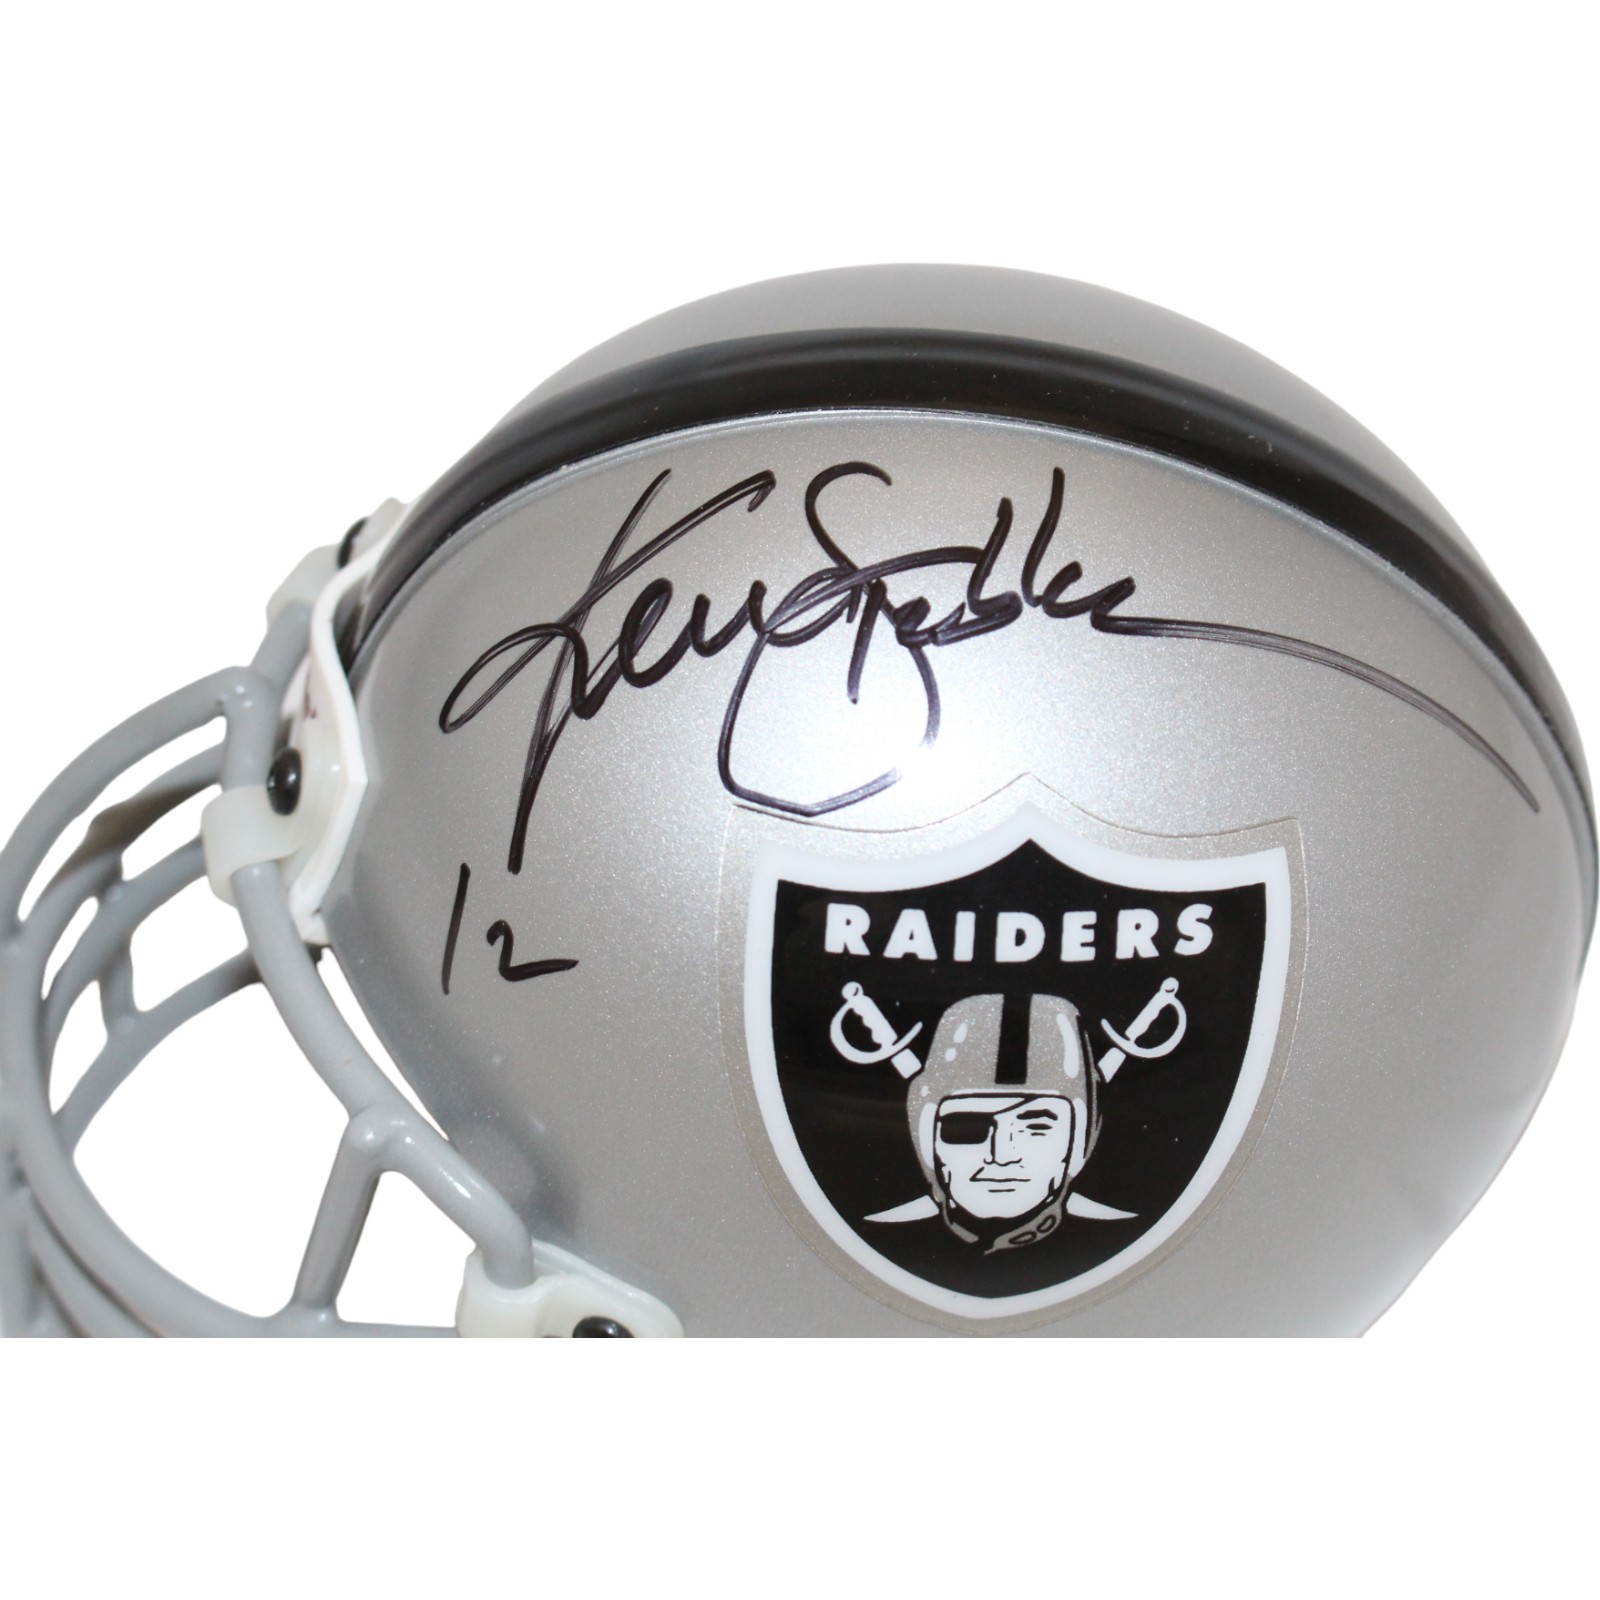 Ken Stabler Signed Oakland Raiders VSR4 Authentic mini Helmet Beckett 44149